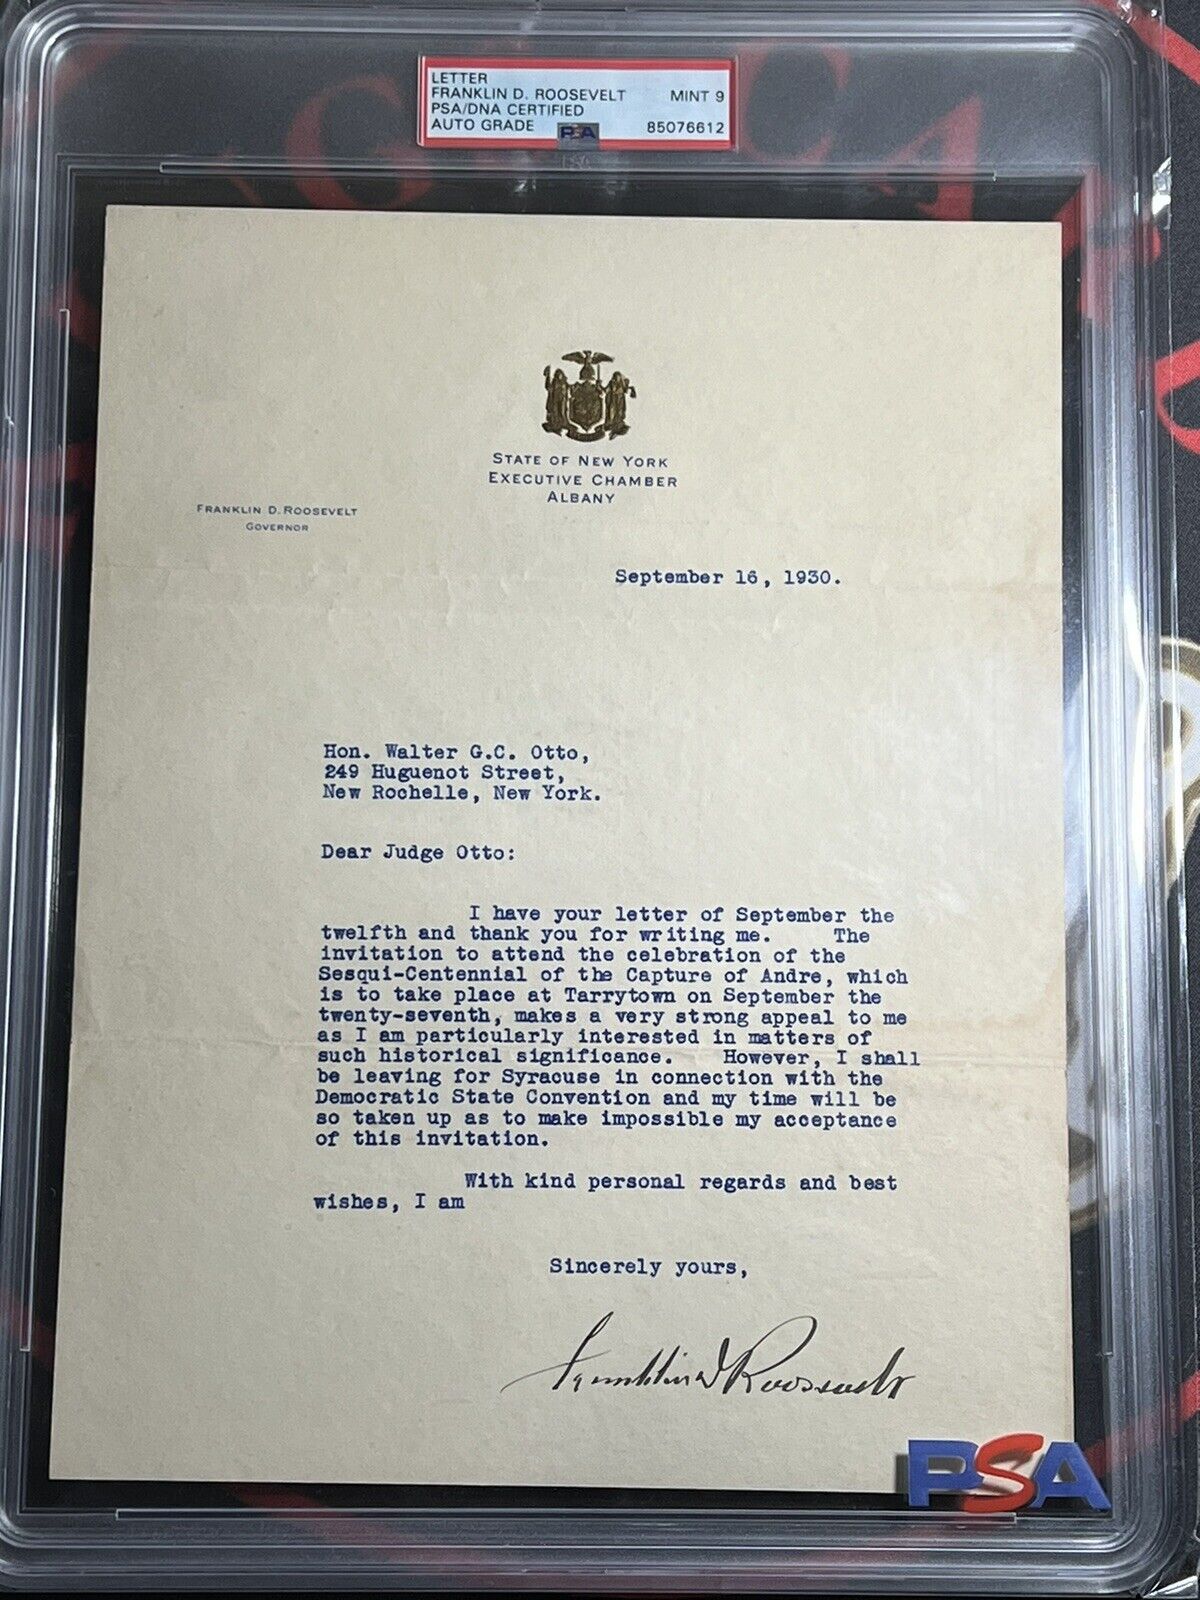 Franklin D. Roosevelt Autographed Government Document Psa/Dna Certified - Auto 9